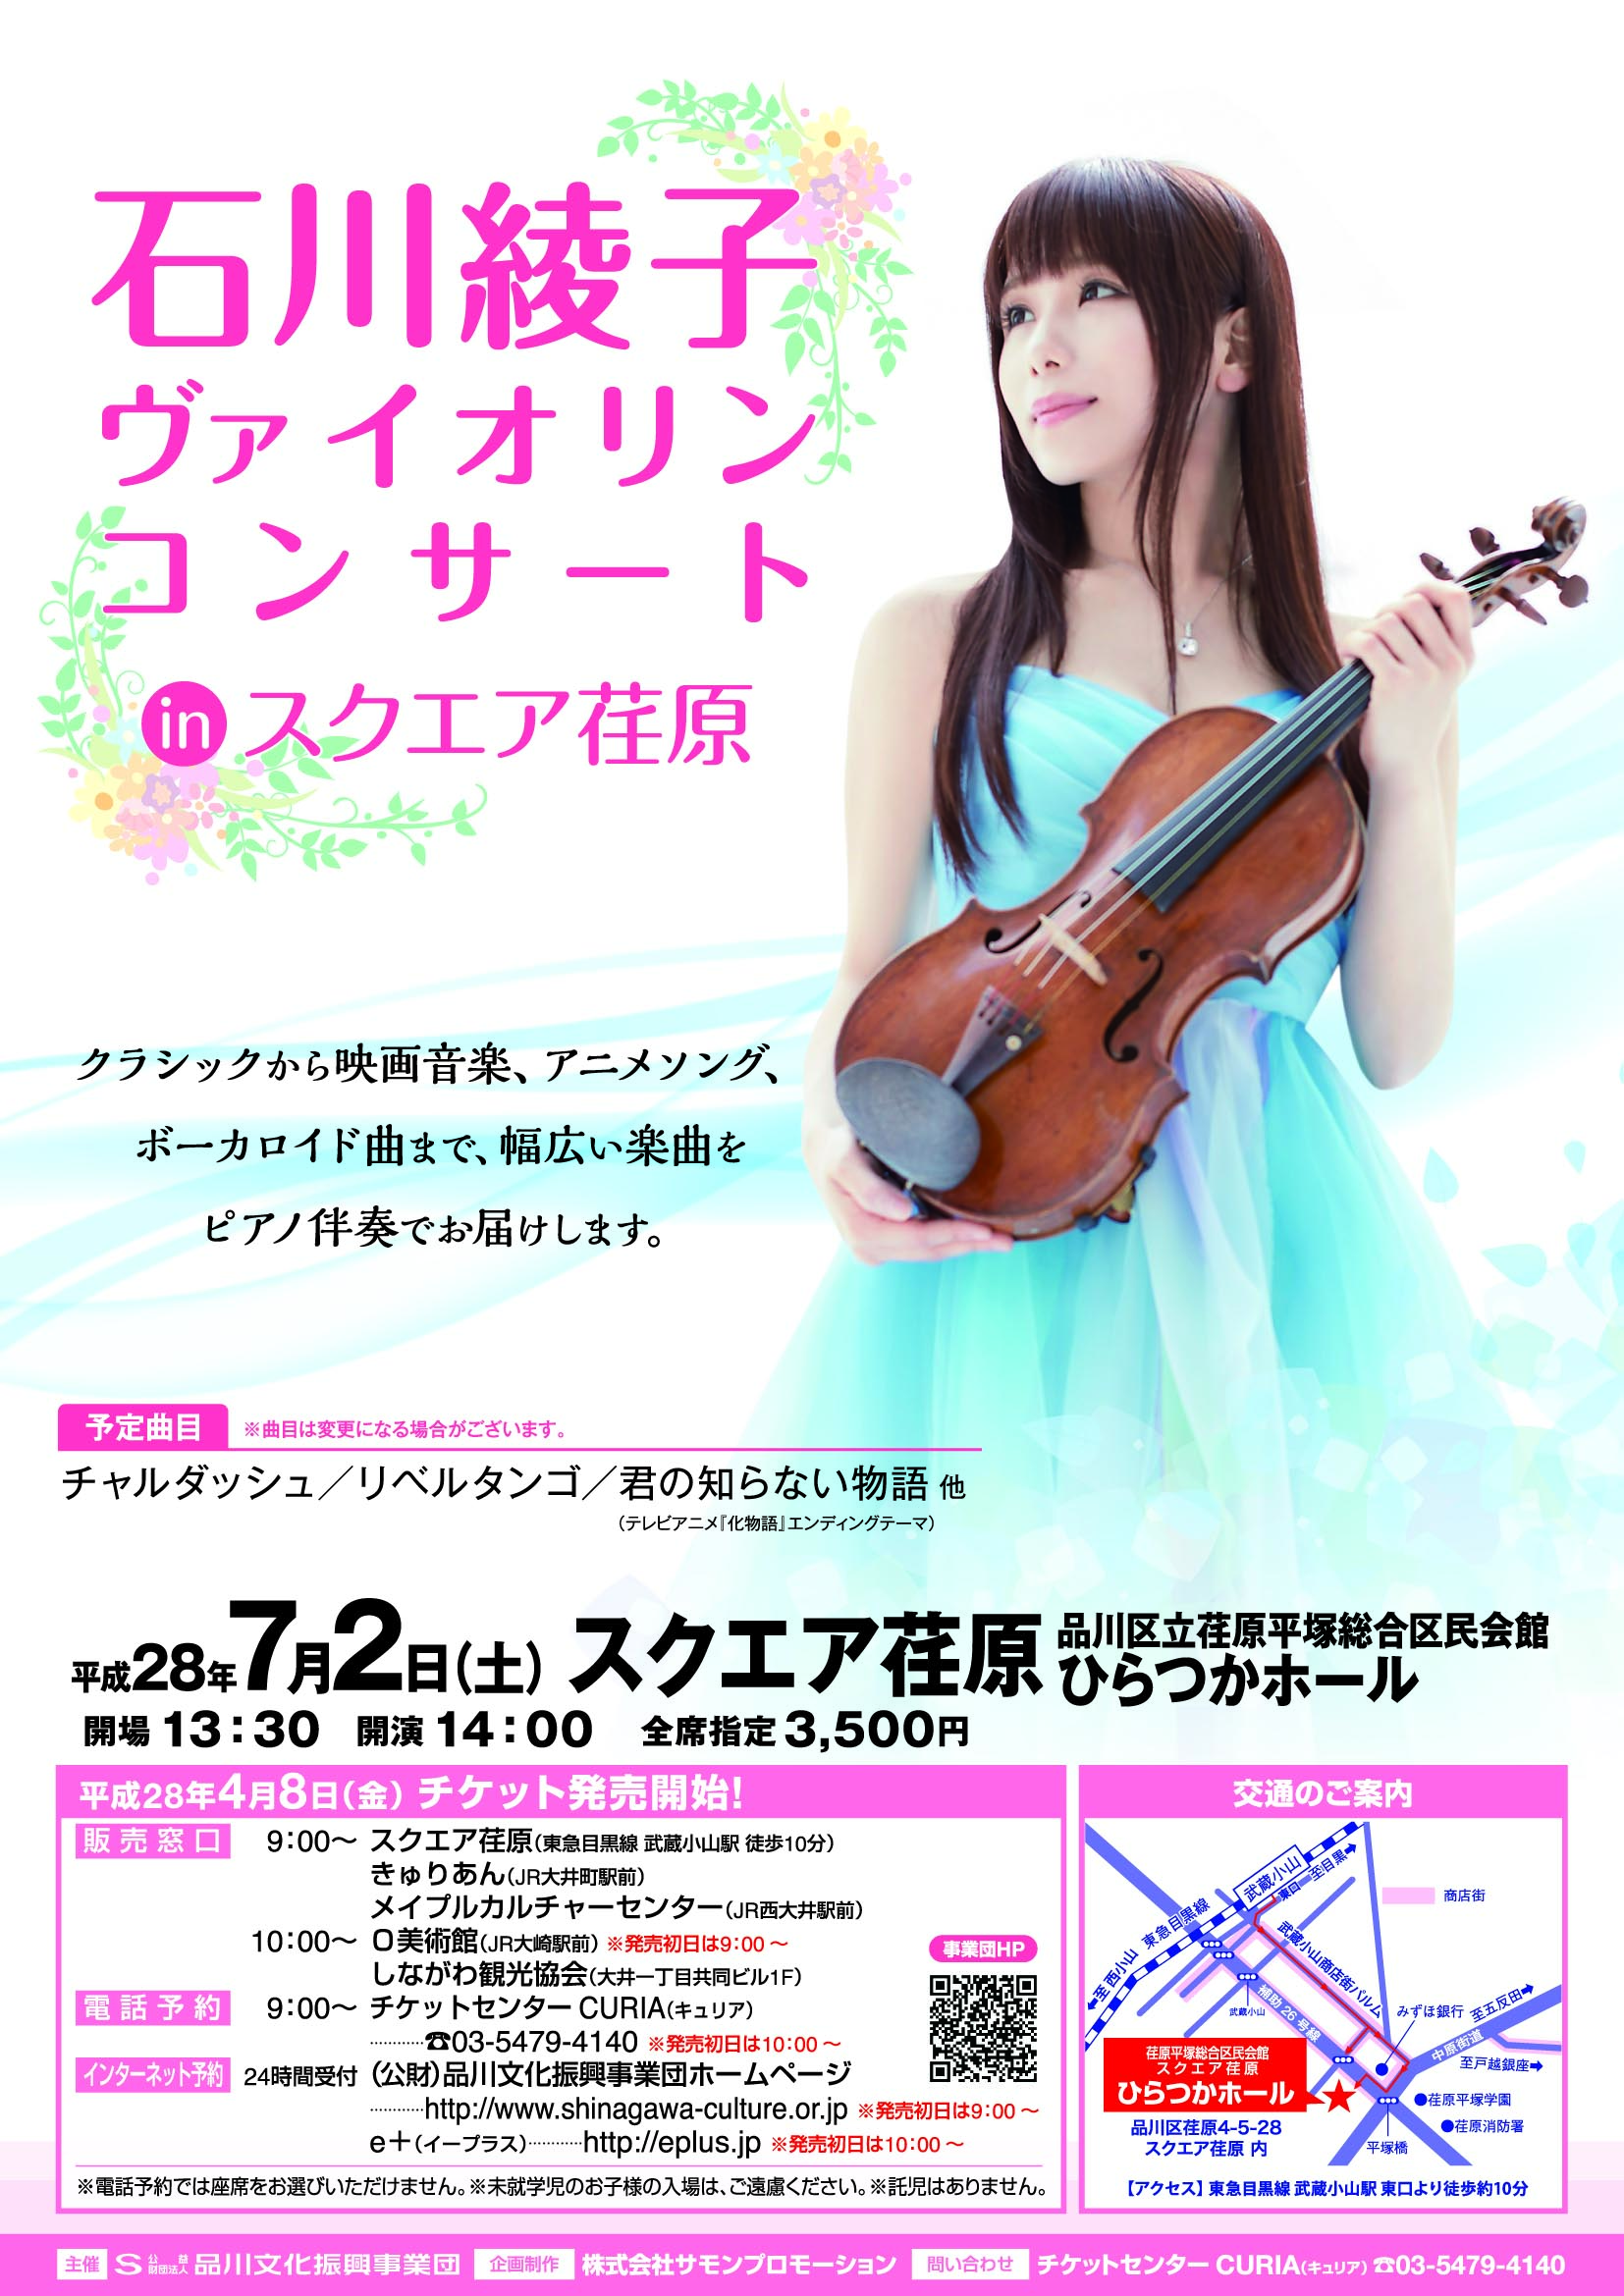 http://ayako-ishikawa.com/schedule/ishikawatirashi.jpg